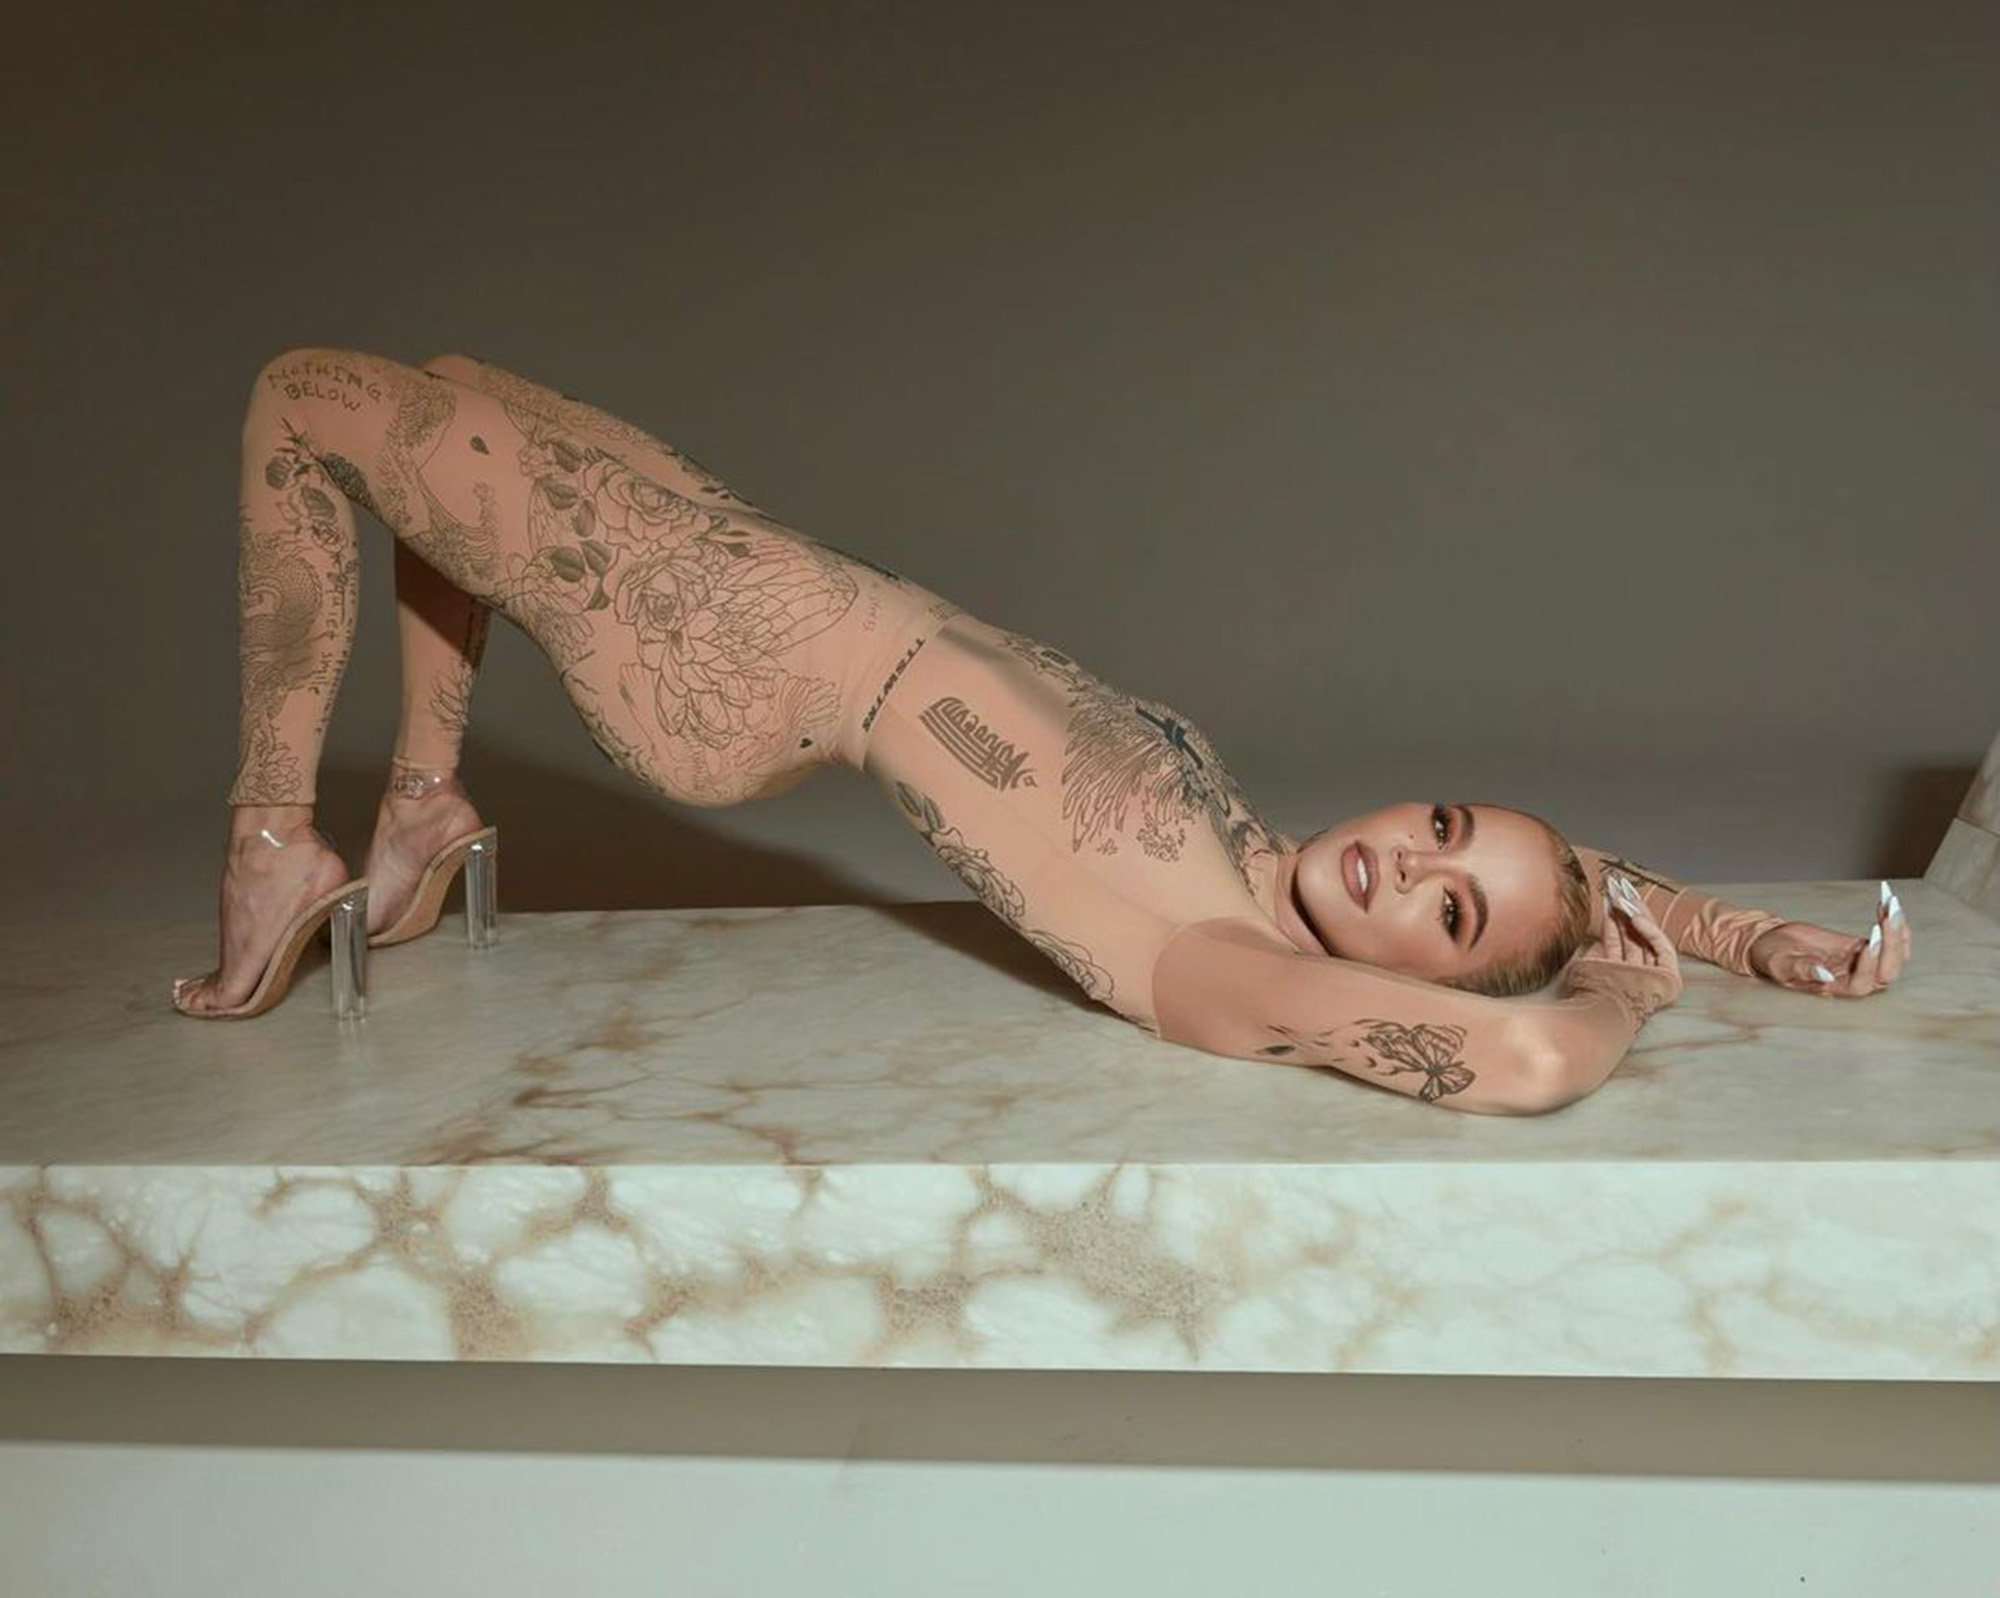 benster comia recommends chloe kardashian nude photos pic